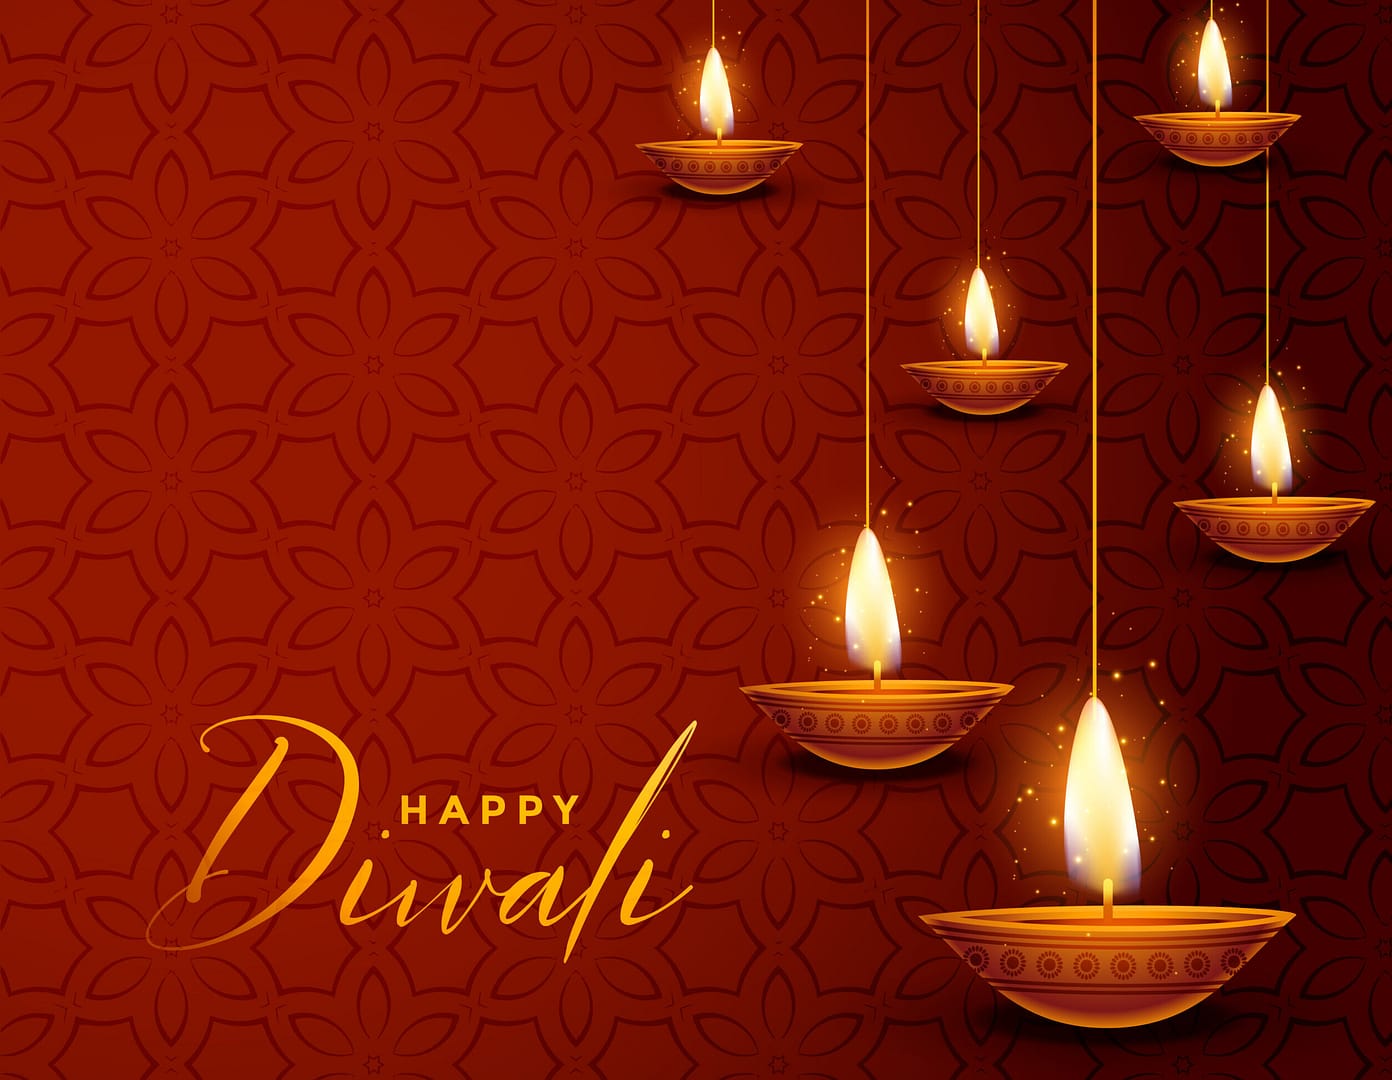 Happy Diwali celebration with lit diyas and beautiful decorations.